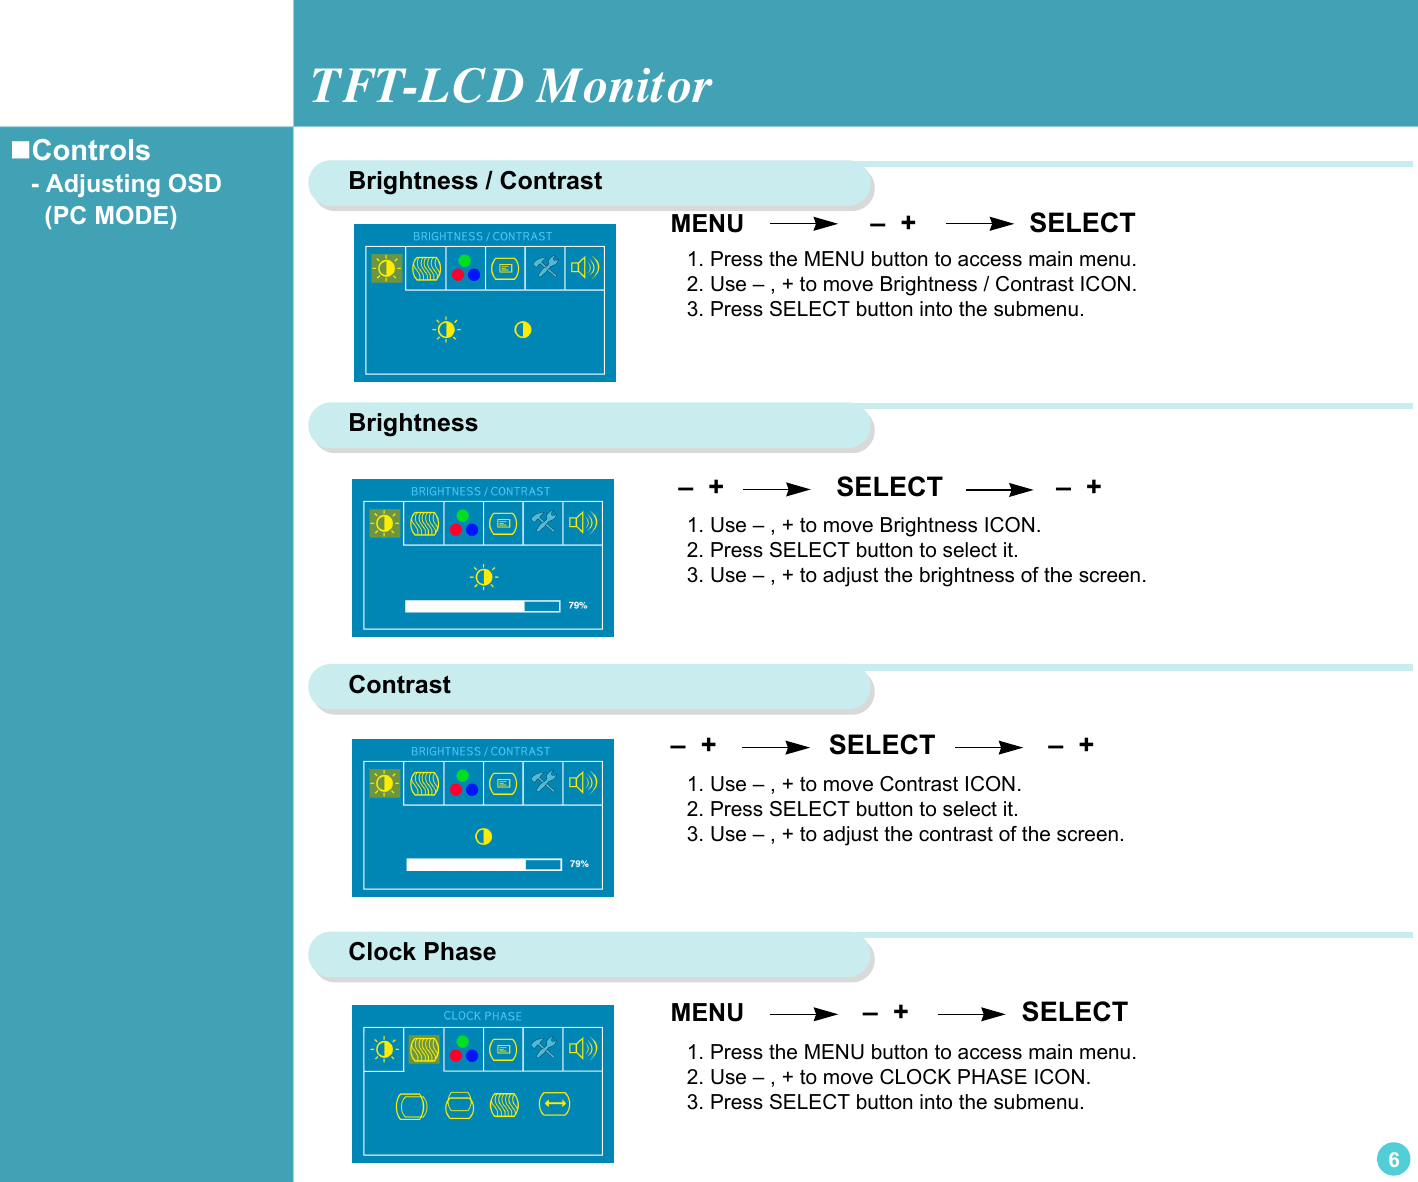 TFT-LCD Monitor6MENU                  –  +               SELECTBrightness / Contrast 1. Press the MENU button to access main menu.2. Use – , + to move Brightness / Contrast ICON.3. Press SELECT button into the submenu.Brightness –  +                SELECT               –  +1. Use – , + to move Brightness ICON.2. Press SELECT button to select it.3. Use – , + to adjust the brightness of the screen.Contrast –  +                SELECT               –  + Clock Phase MENU                 –  +               SELECT1. Press the MENU button to access main menu.2. Use – , + to move CLOCK PHASE ICON.3. Press SELECT button into the submenu.1. Use – , + to move Contrast ICON.2. Press SELECT button to select it.3. Use – , + to adjust the contrast of the screen.Controls   - Adjusting OSD     (PC MODE)  